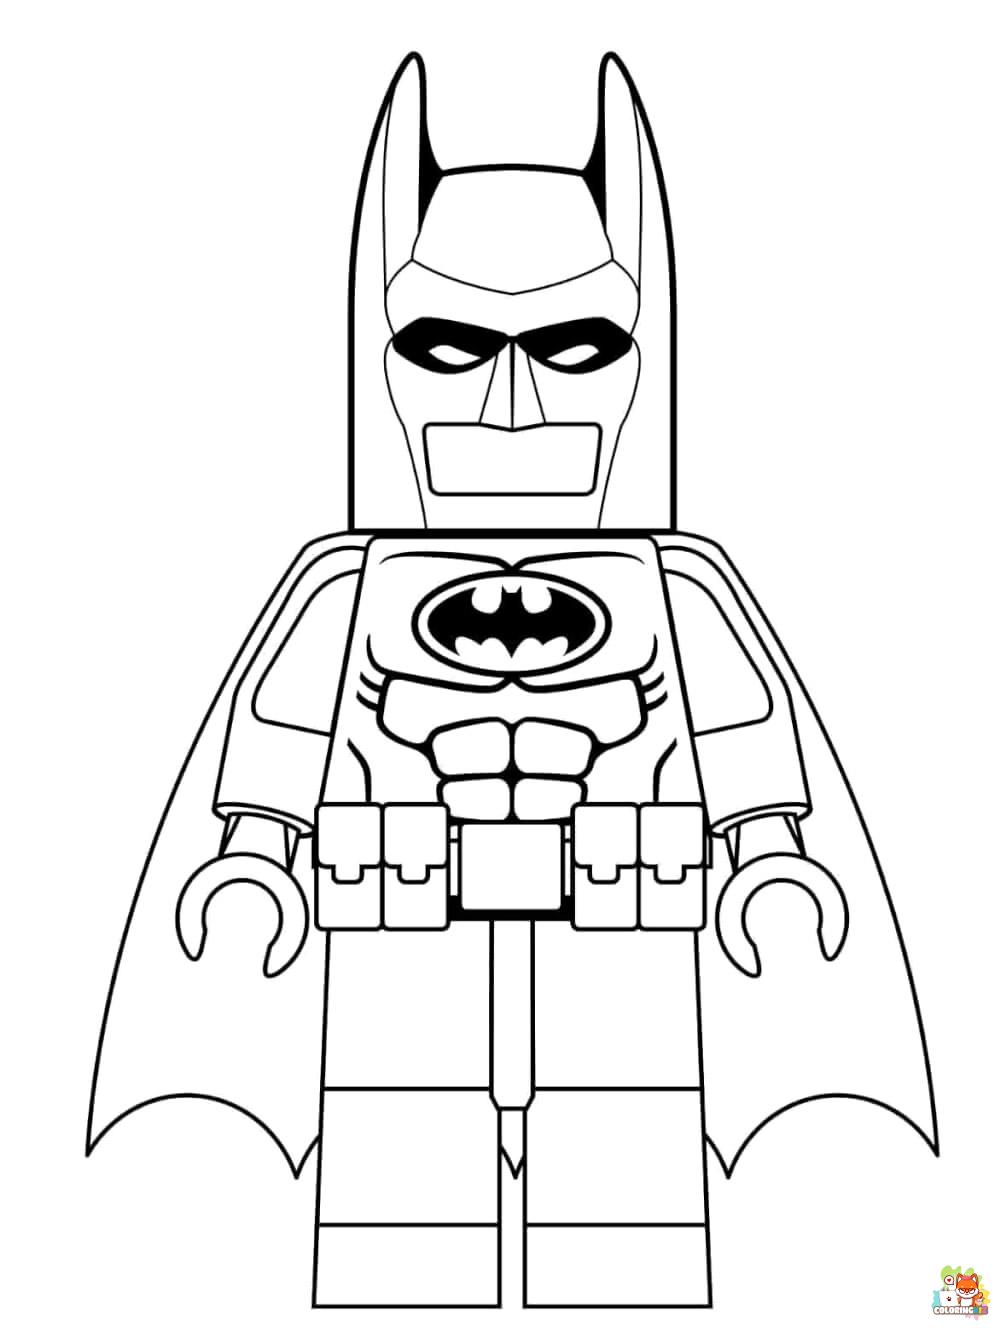 Lego Batman Coloring Pages easy 1